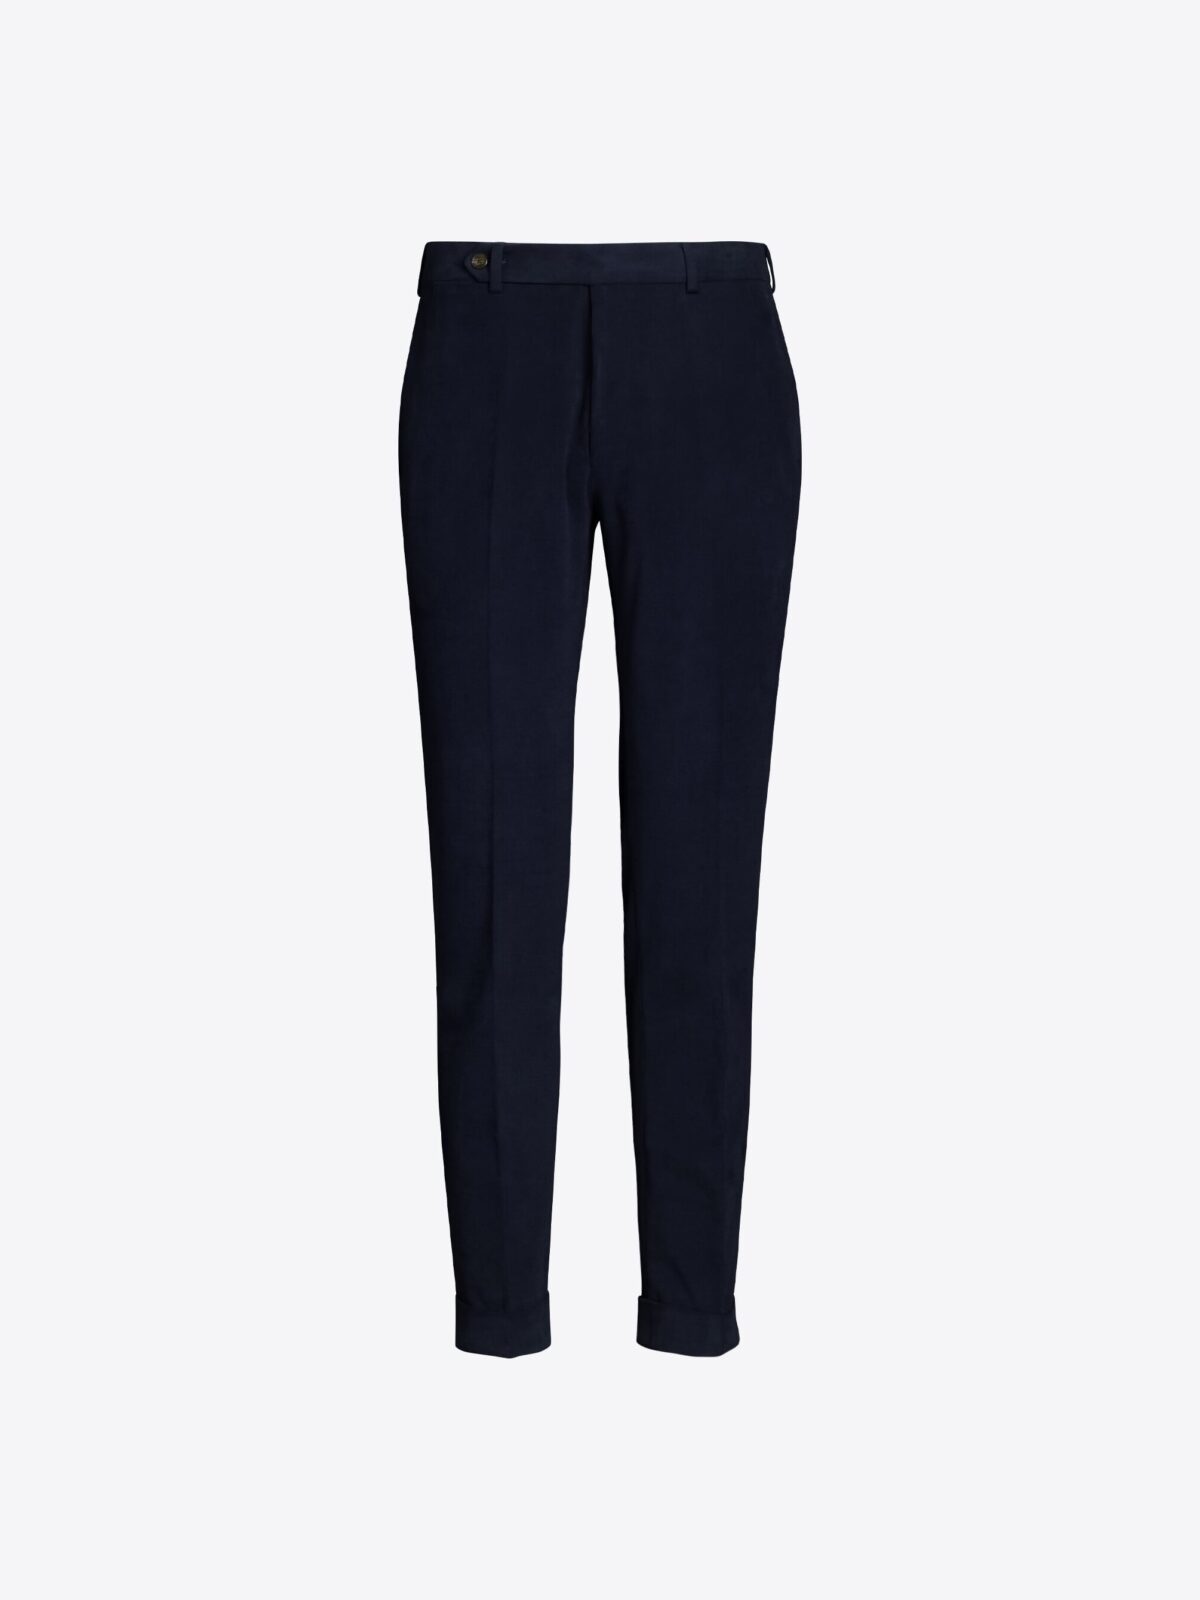 Oxford Womens Work Pants Size 12 Grey Wool Pockets Zip Stretch